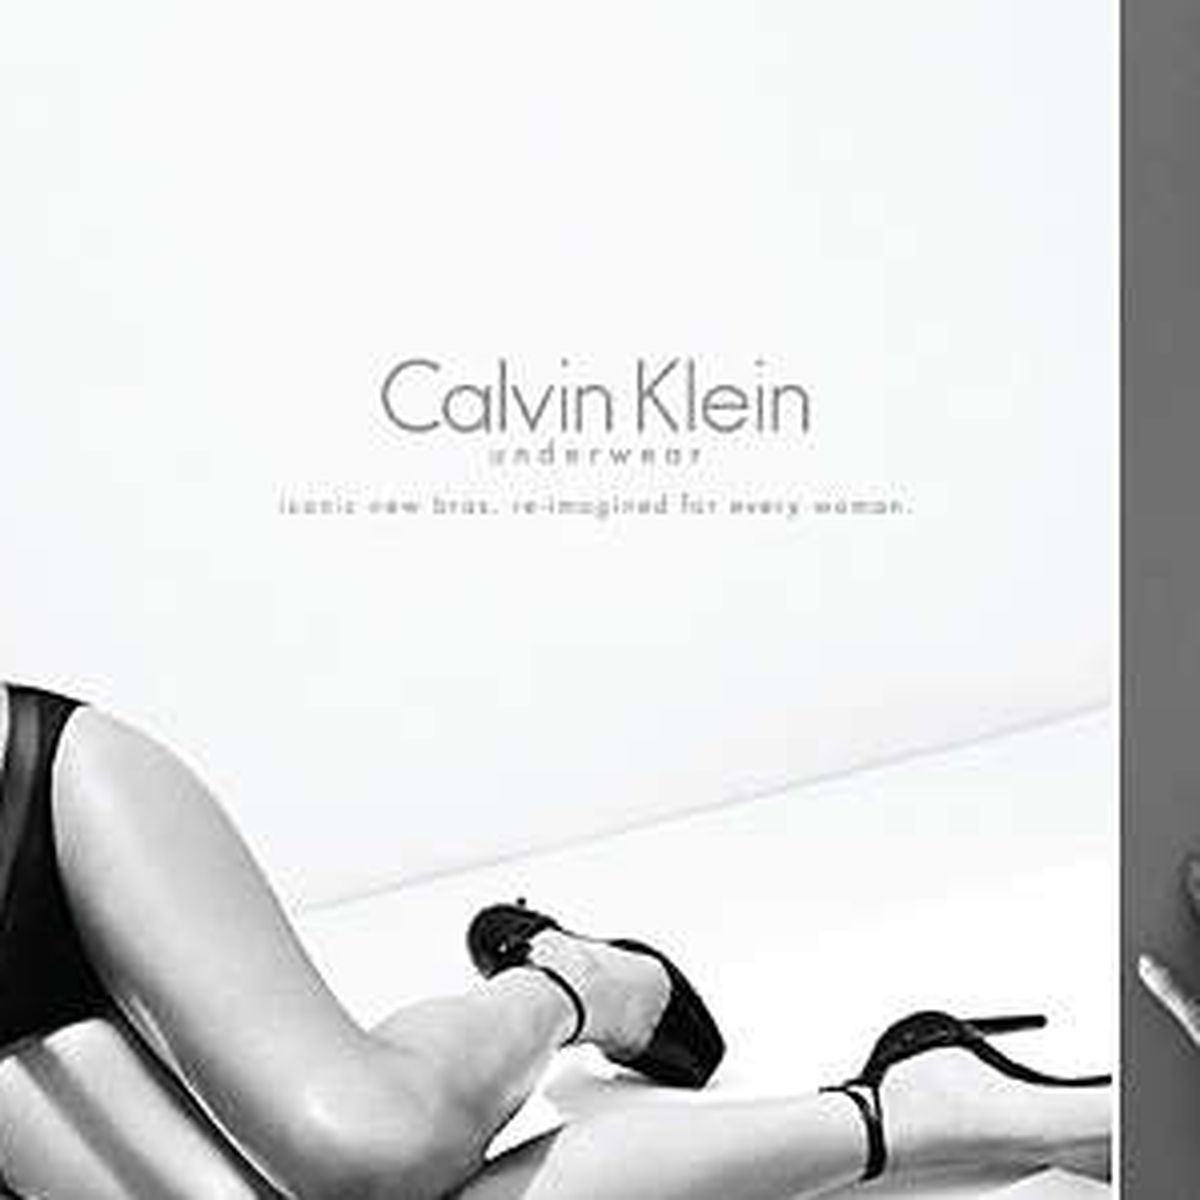 Christy Turlington Photoshopped in Calvin Klein's New Ads